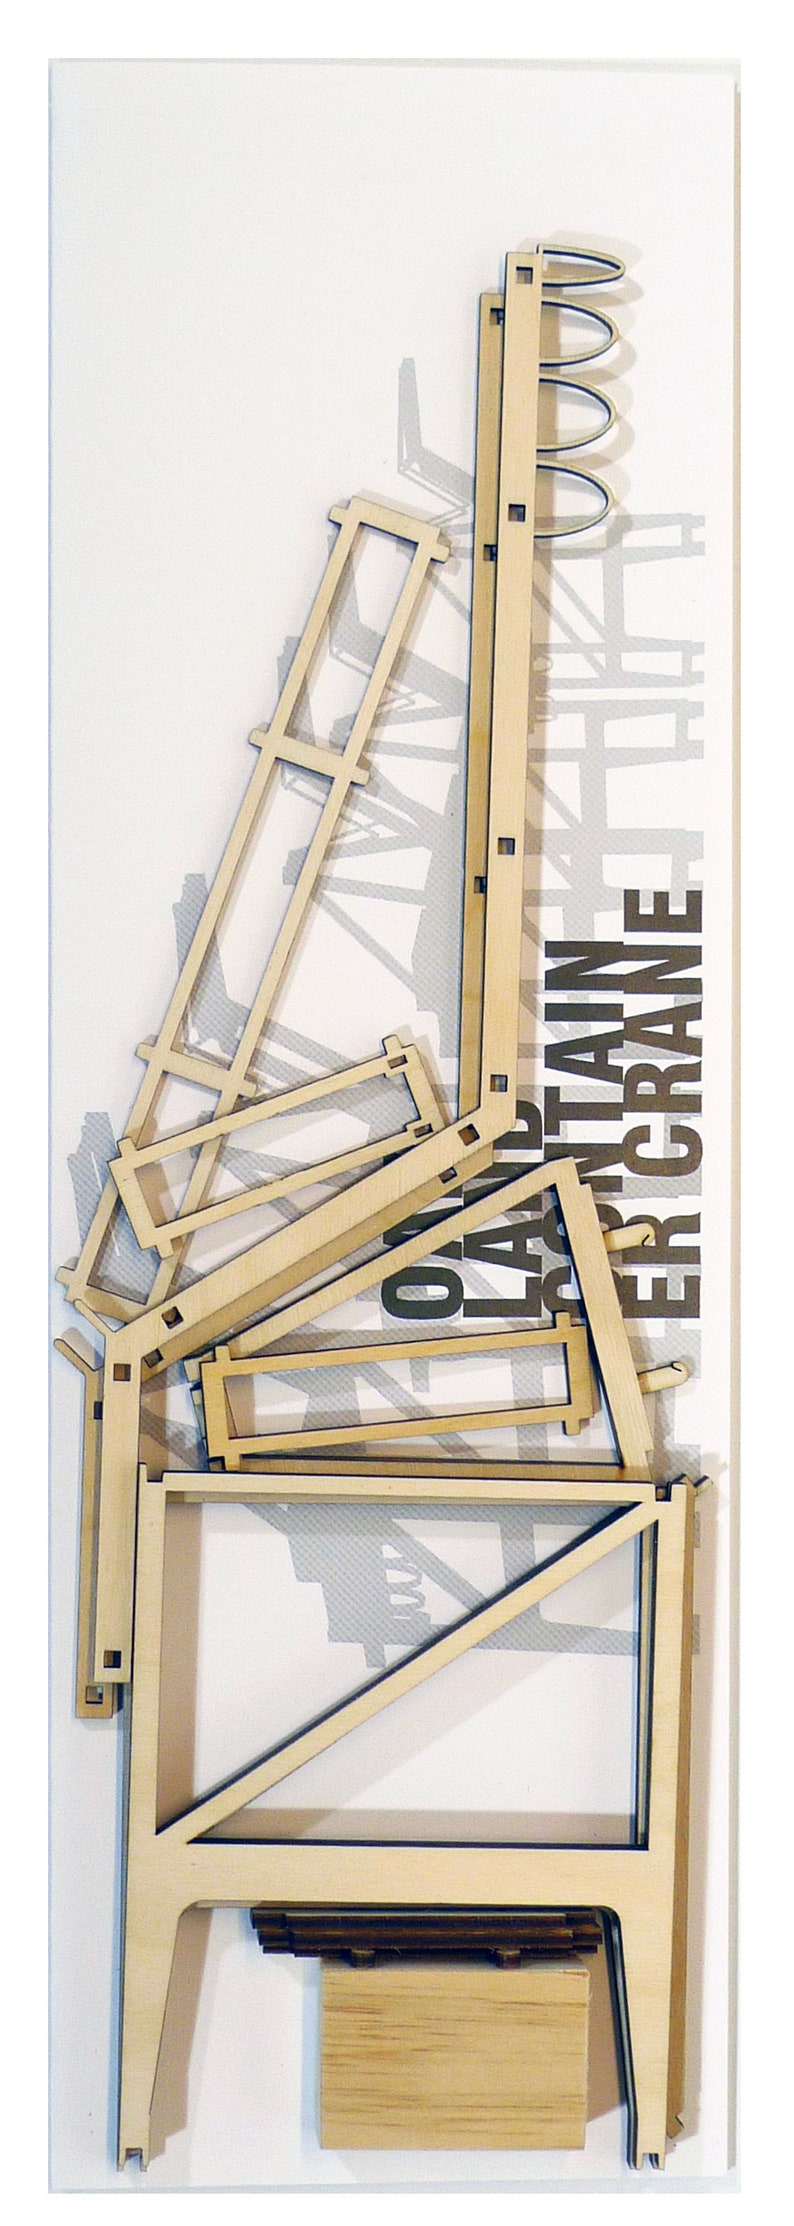 Oakland Crane lasercut model kit image 6